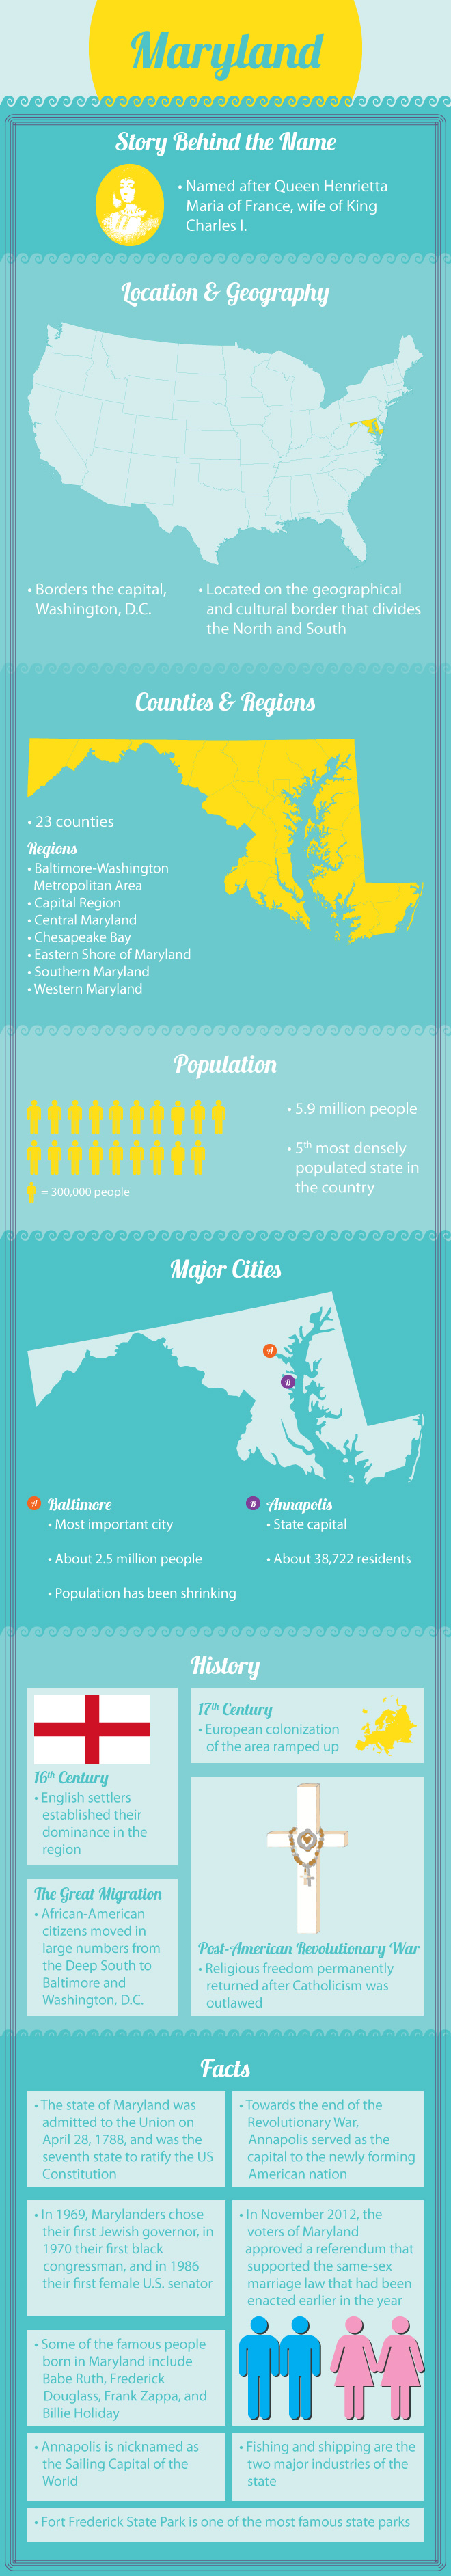 Maryland Infographic